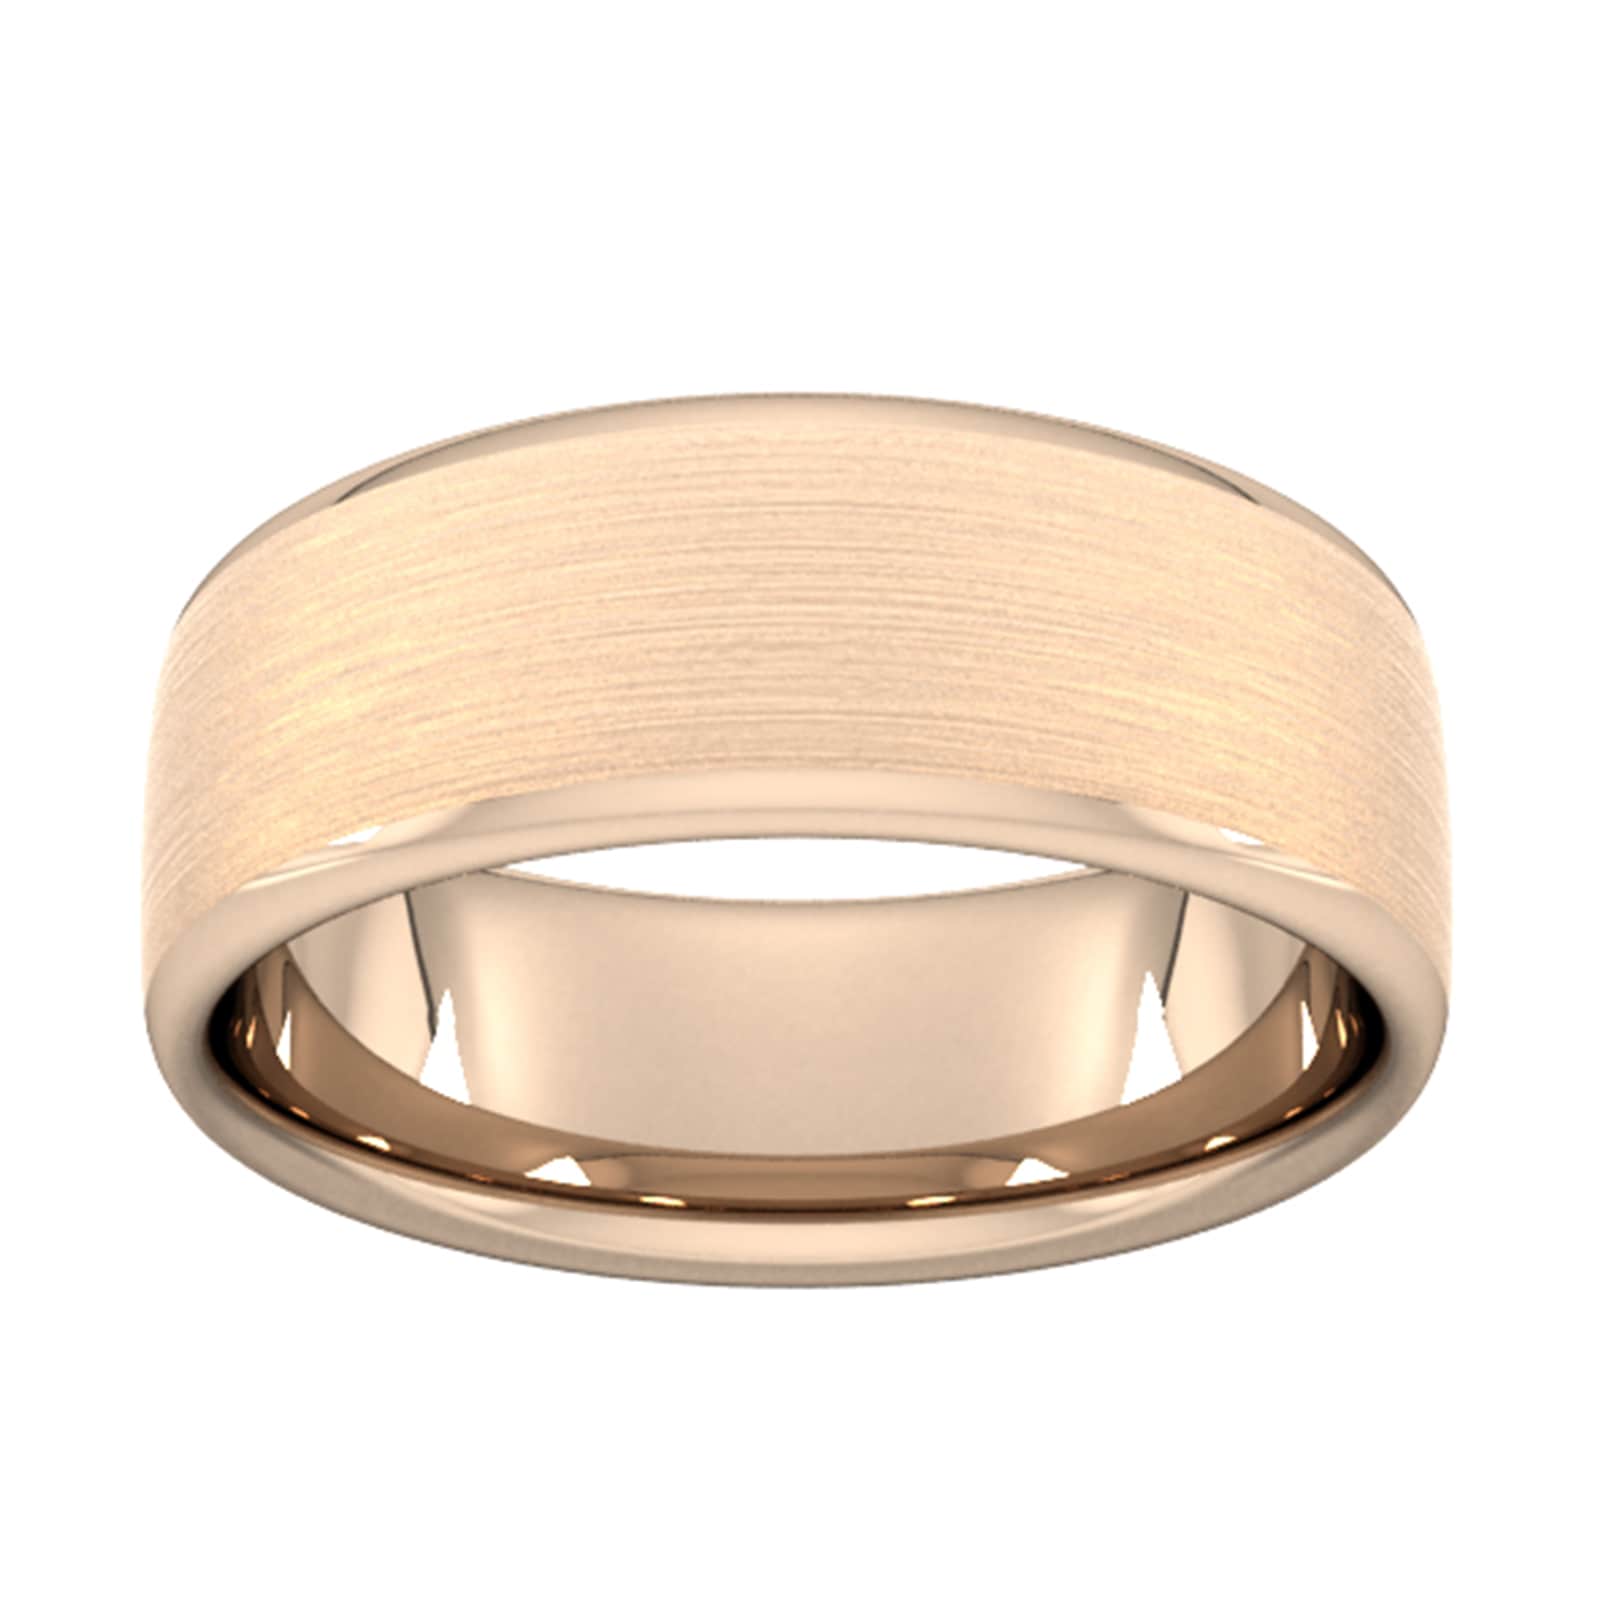 8mm D Shape Standard Matt Finished Wedding Ring In 18 Carat Rose Gold - Ring Size J